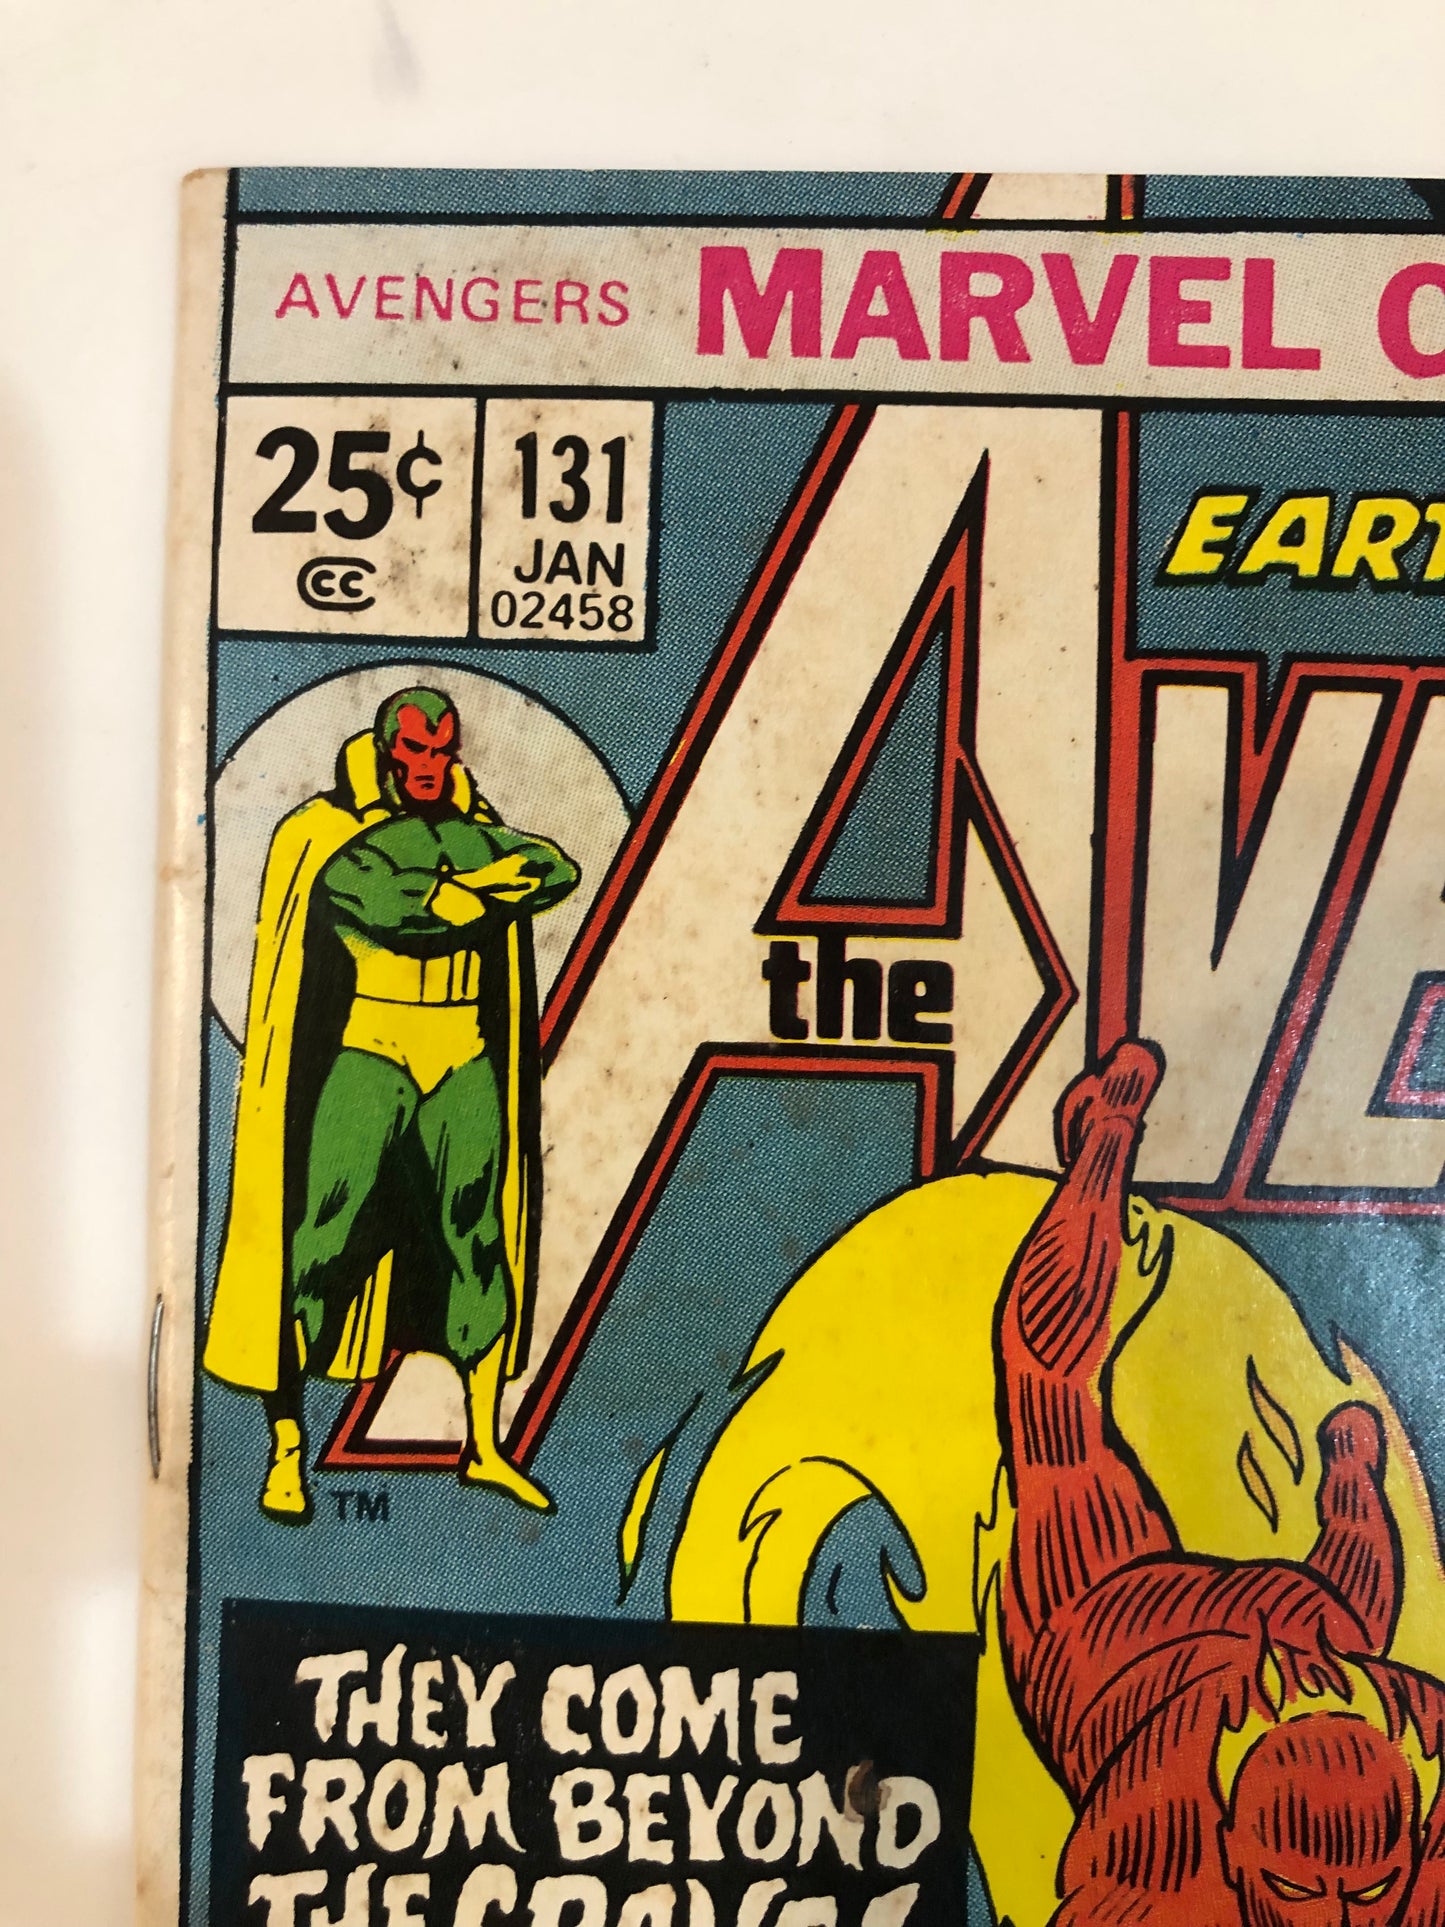 The Avengers #131